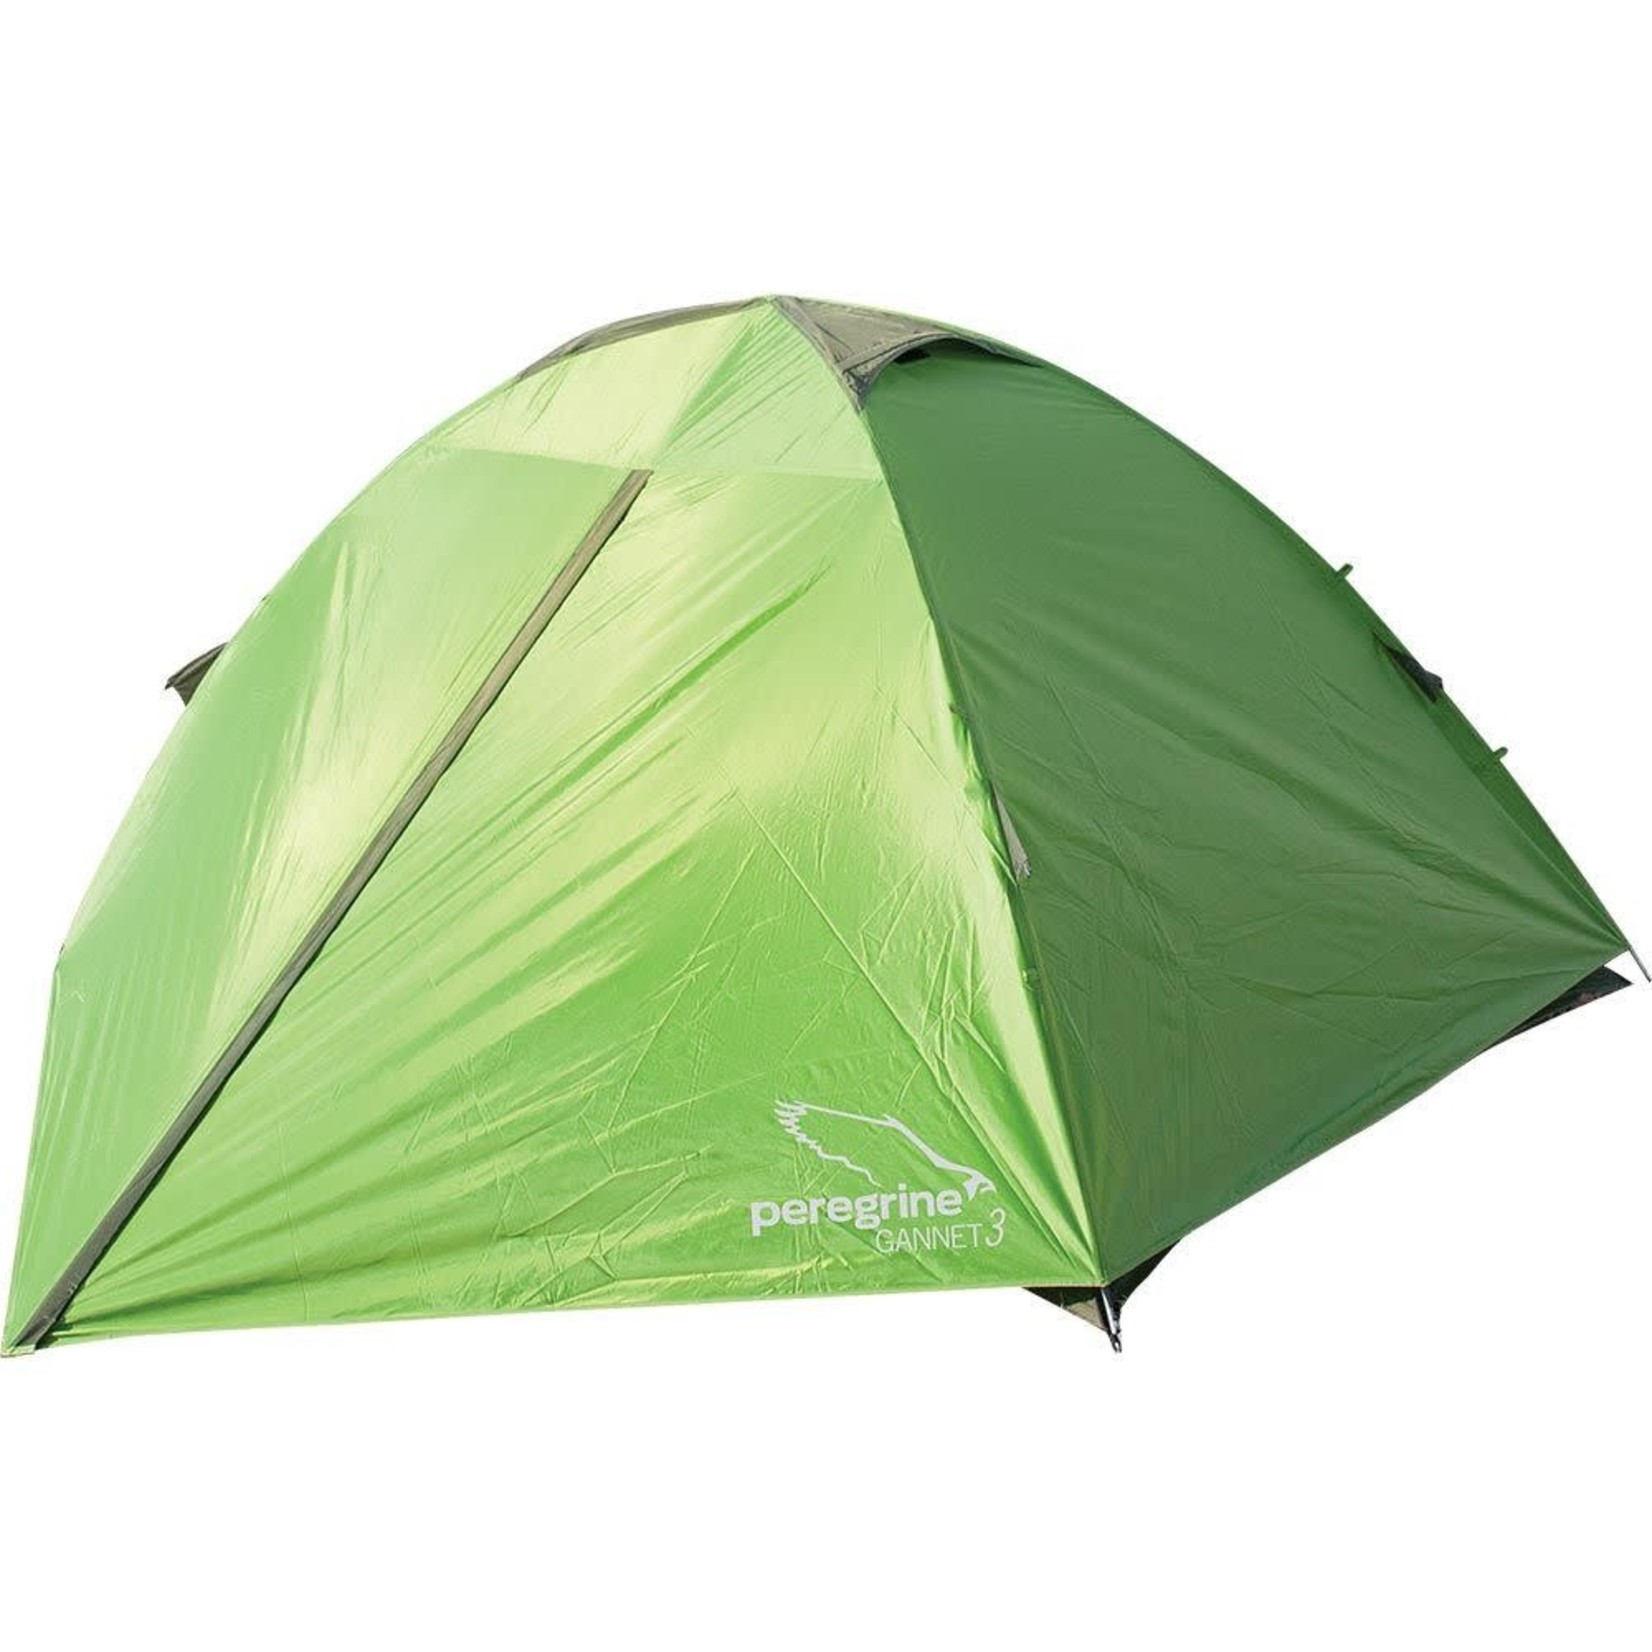 Peregrine GANNET 3P tent & foot pad